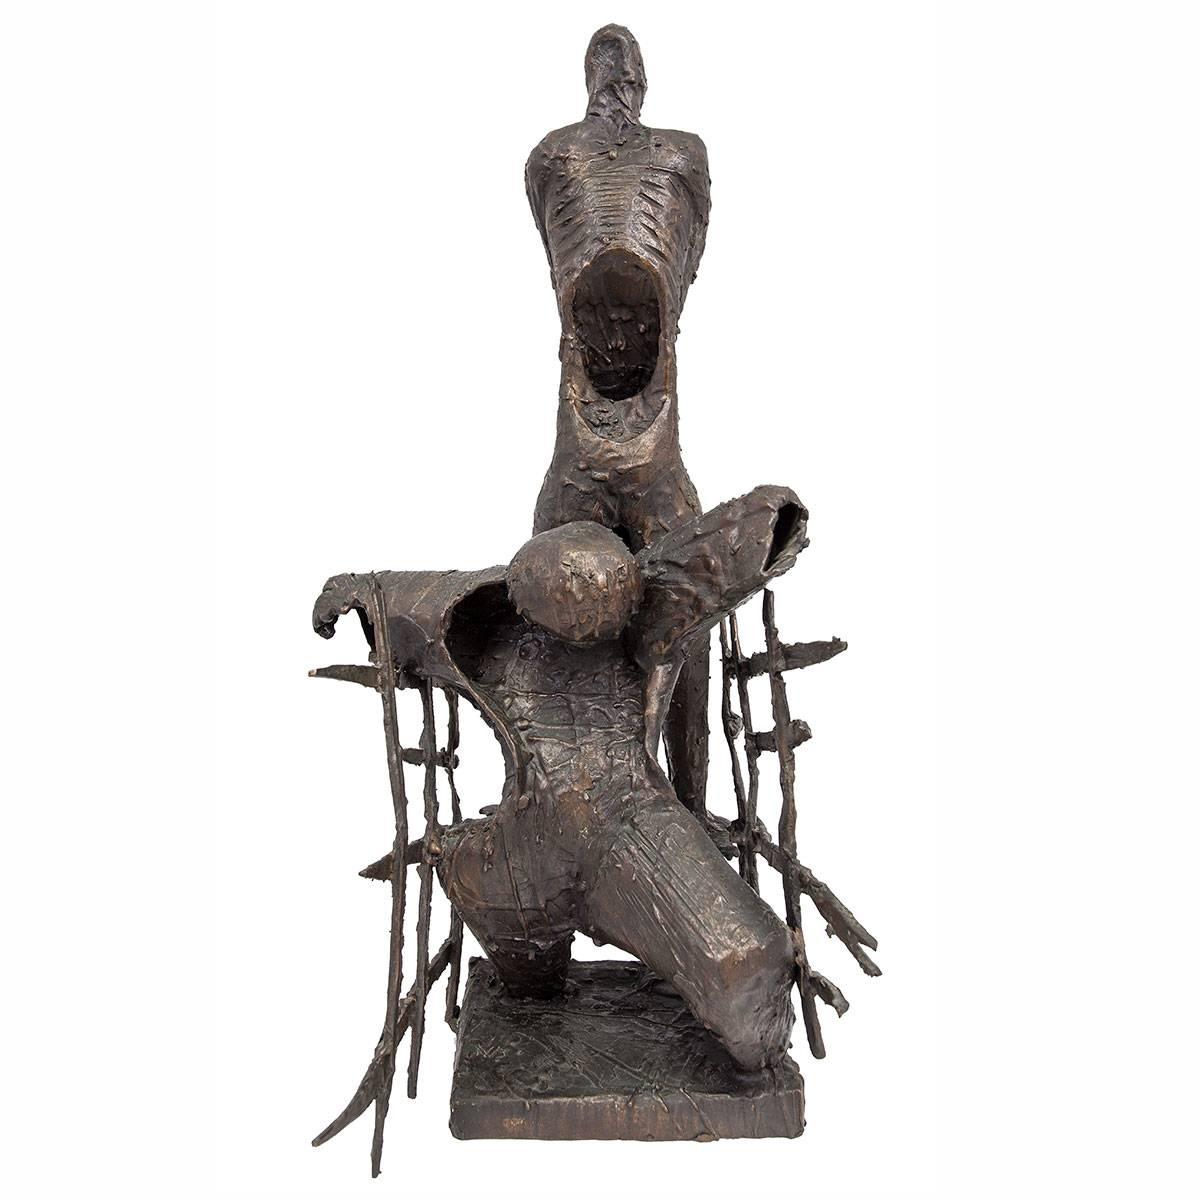 Unknown Figurative Sculpture - Brutalist Bronze Sculpture, Monument to Oppression, Expressionist Holocaust Art